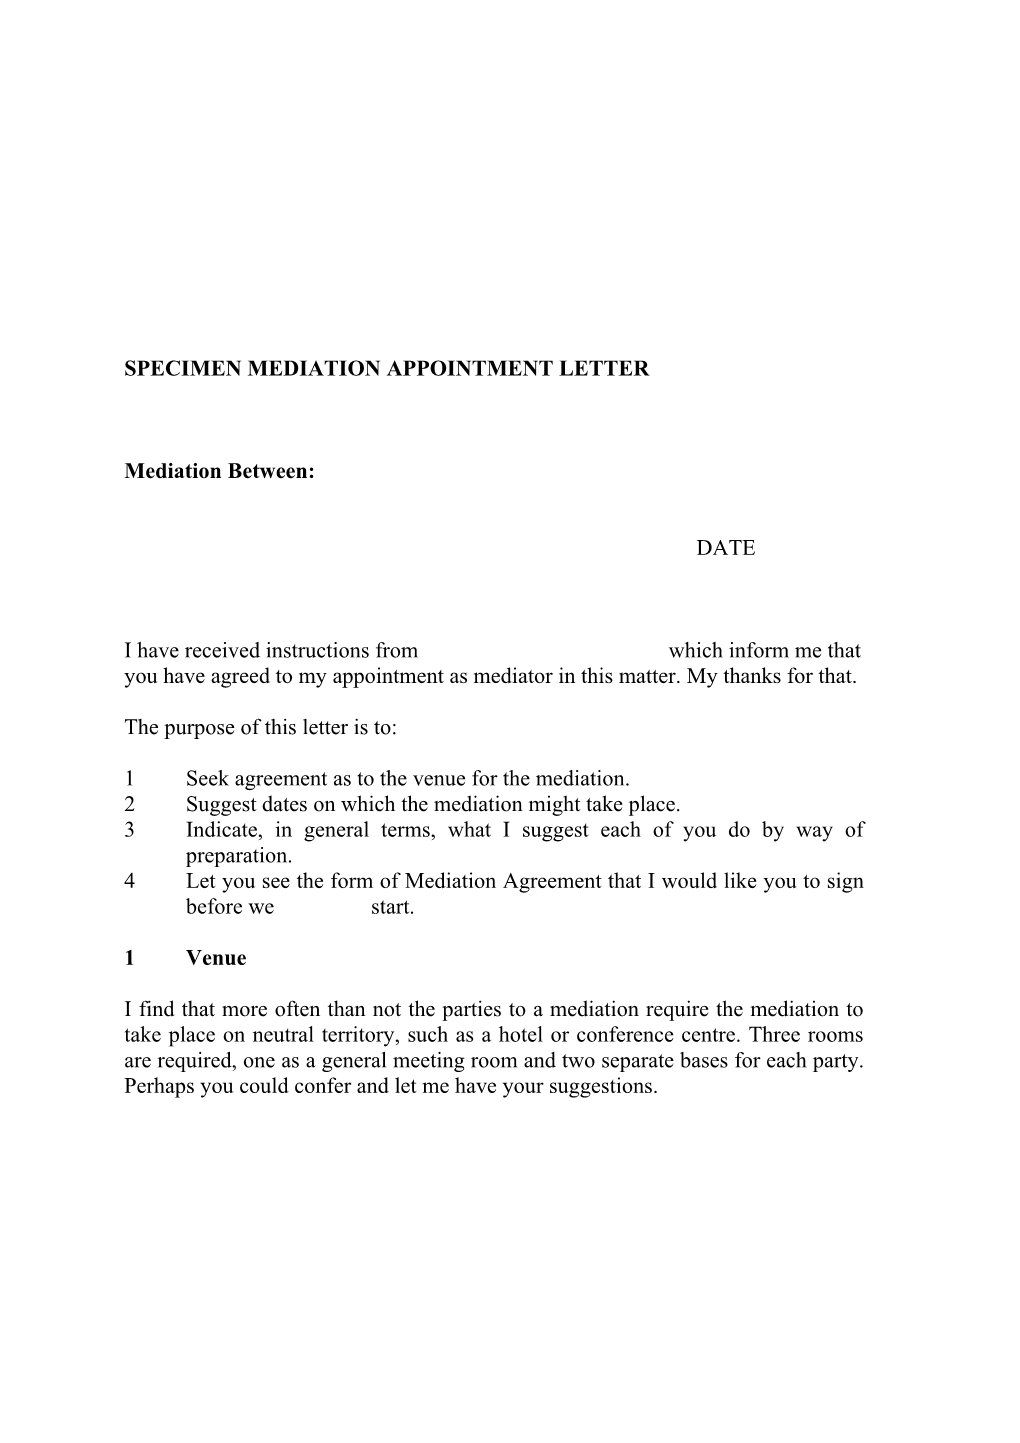 Specimen Mediation Appointment Letter